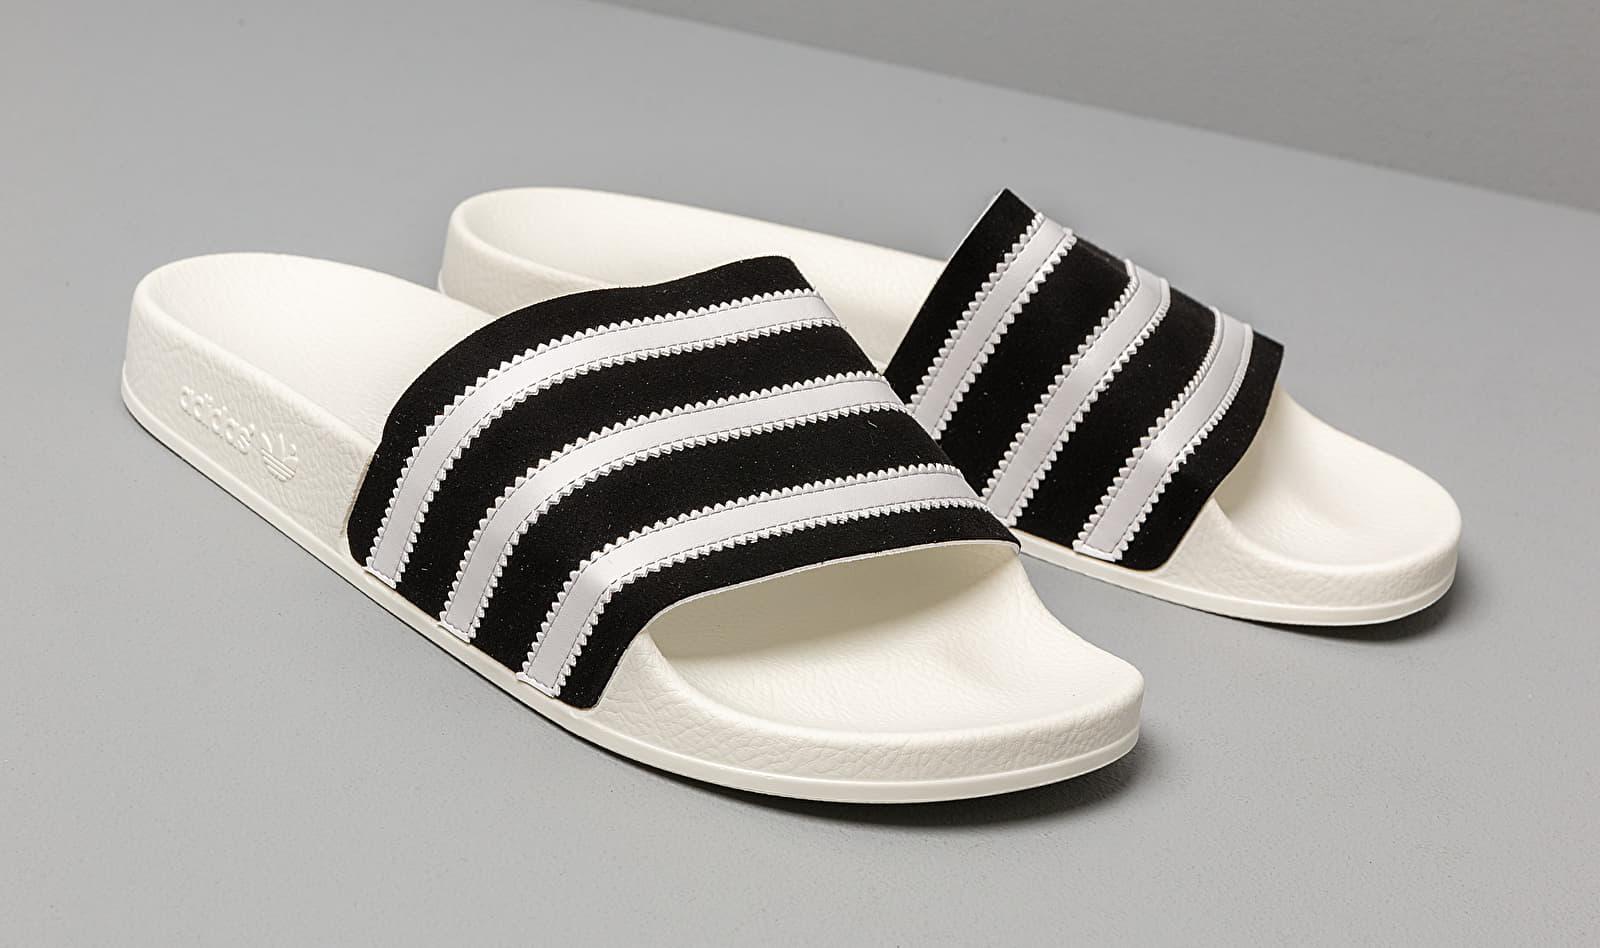 Adidas | adidas Men Adilette Lyst for Off Originals White/ Ftw Black/ White Core